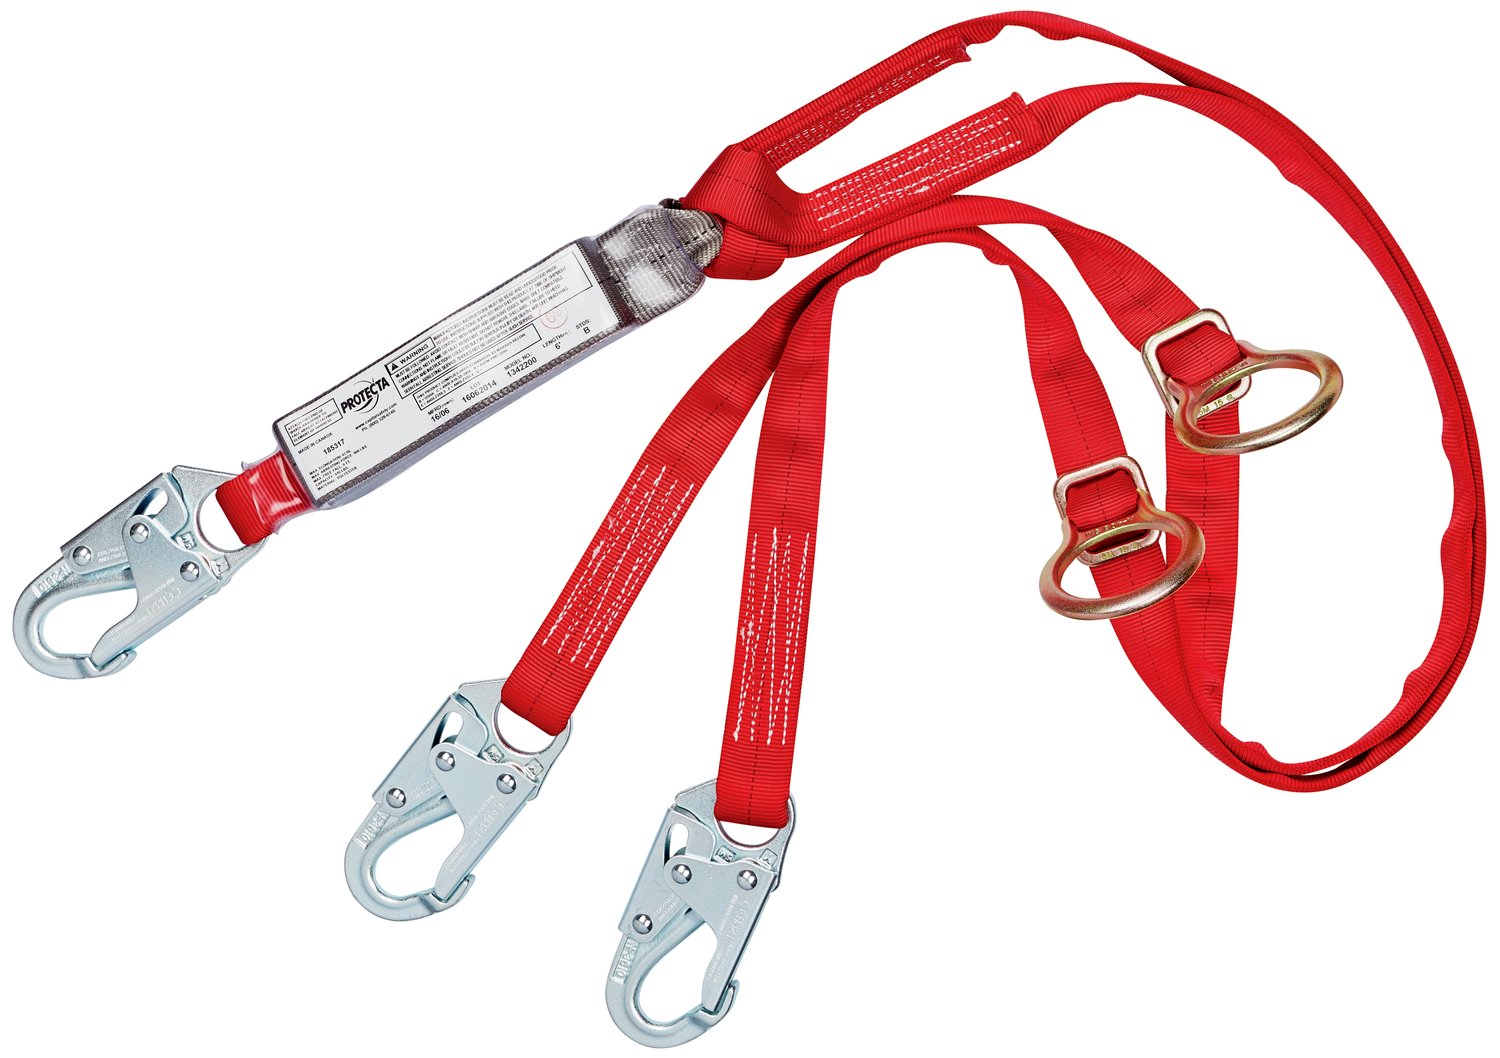 7012817406 - 3M Protecta Tie-Back 100% Tie-Off Web Shock-Absorbing Lanyard 1342200, 6 ft